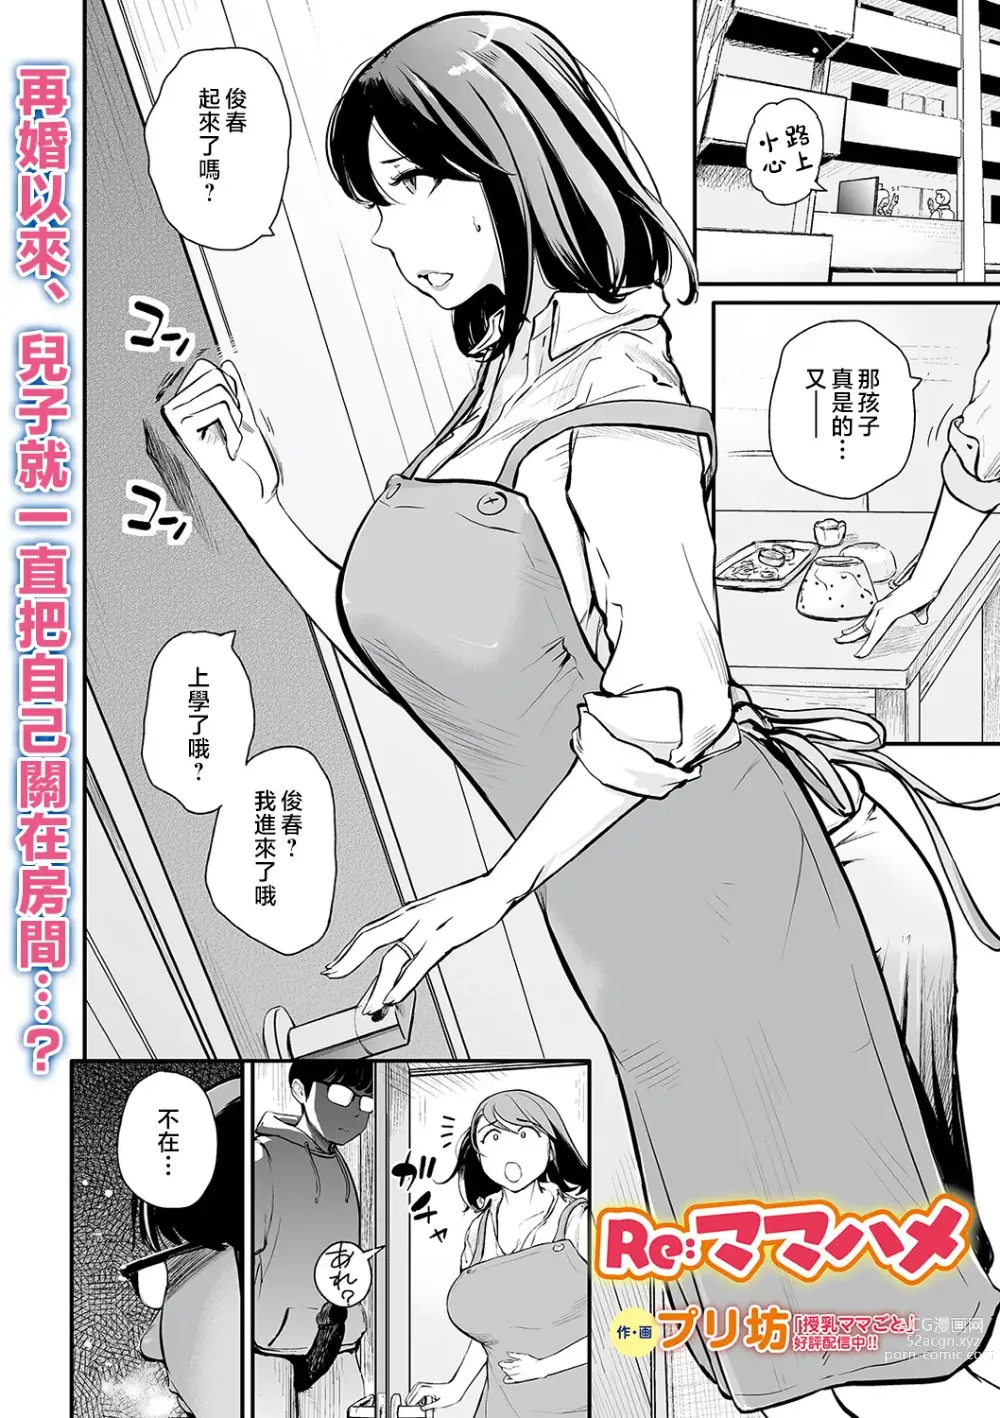 Page 2 of manga Re mama hame